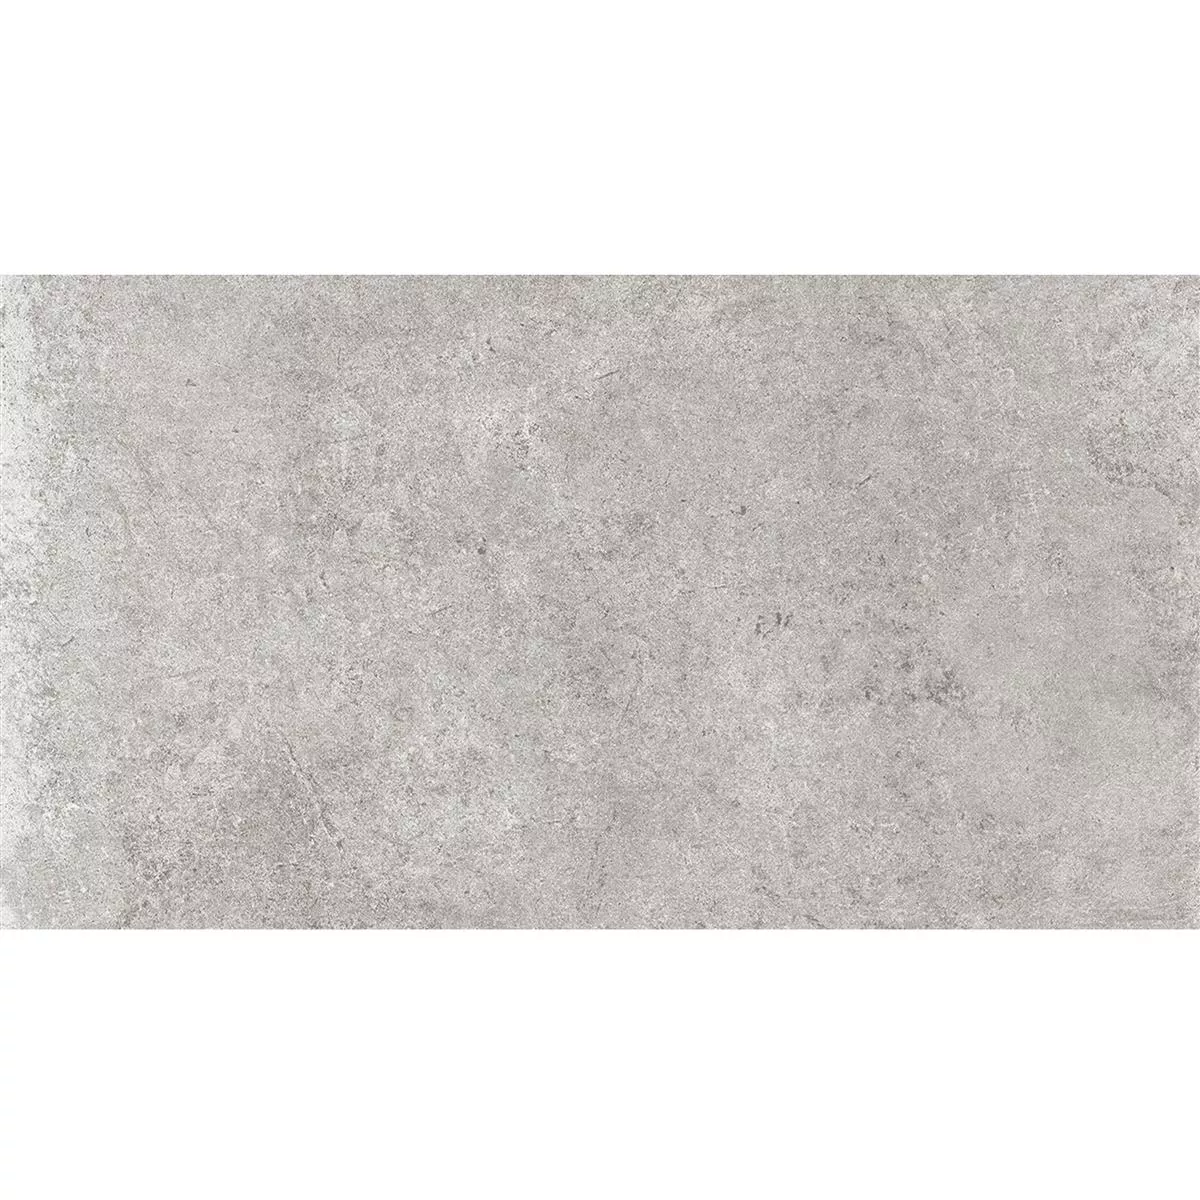 Sample Floor Tiles Colossus Grey 30x60cm